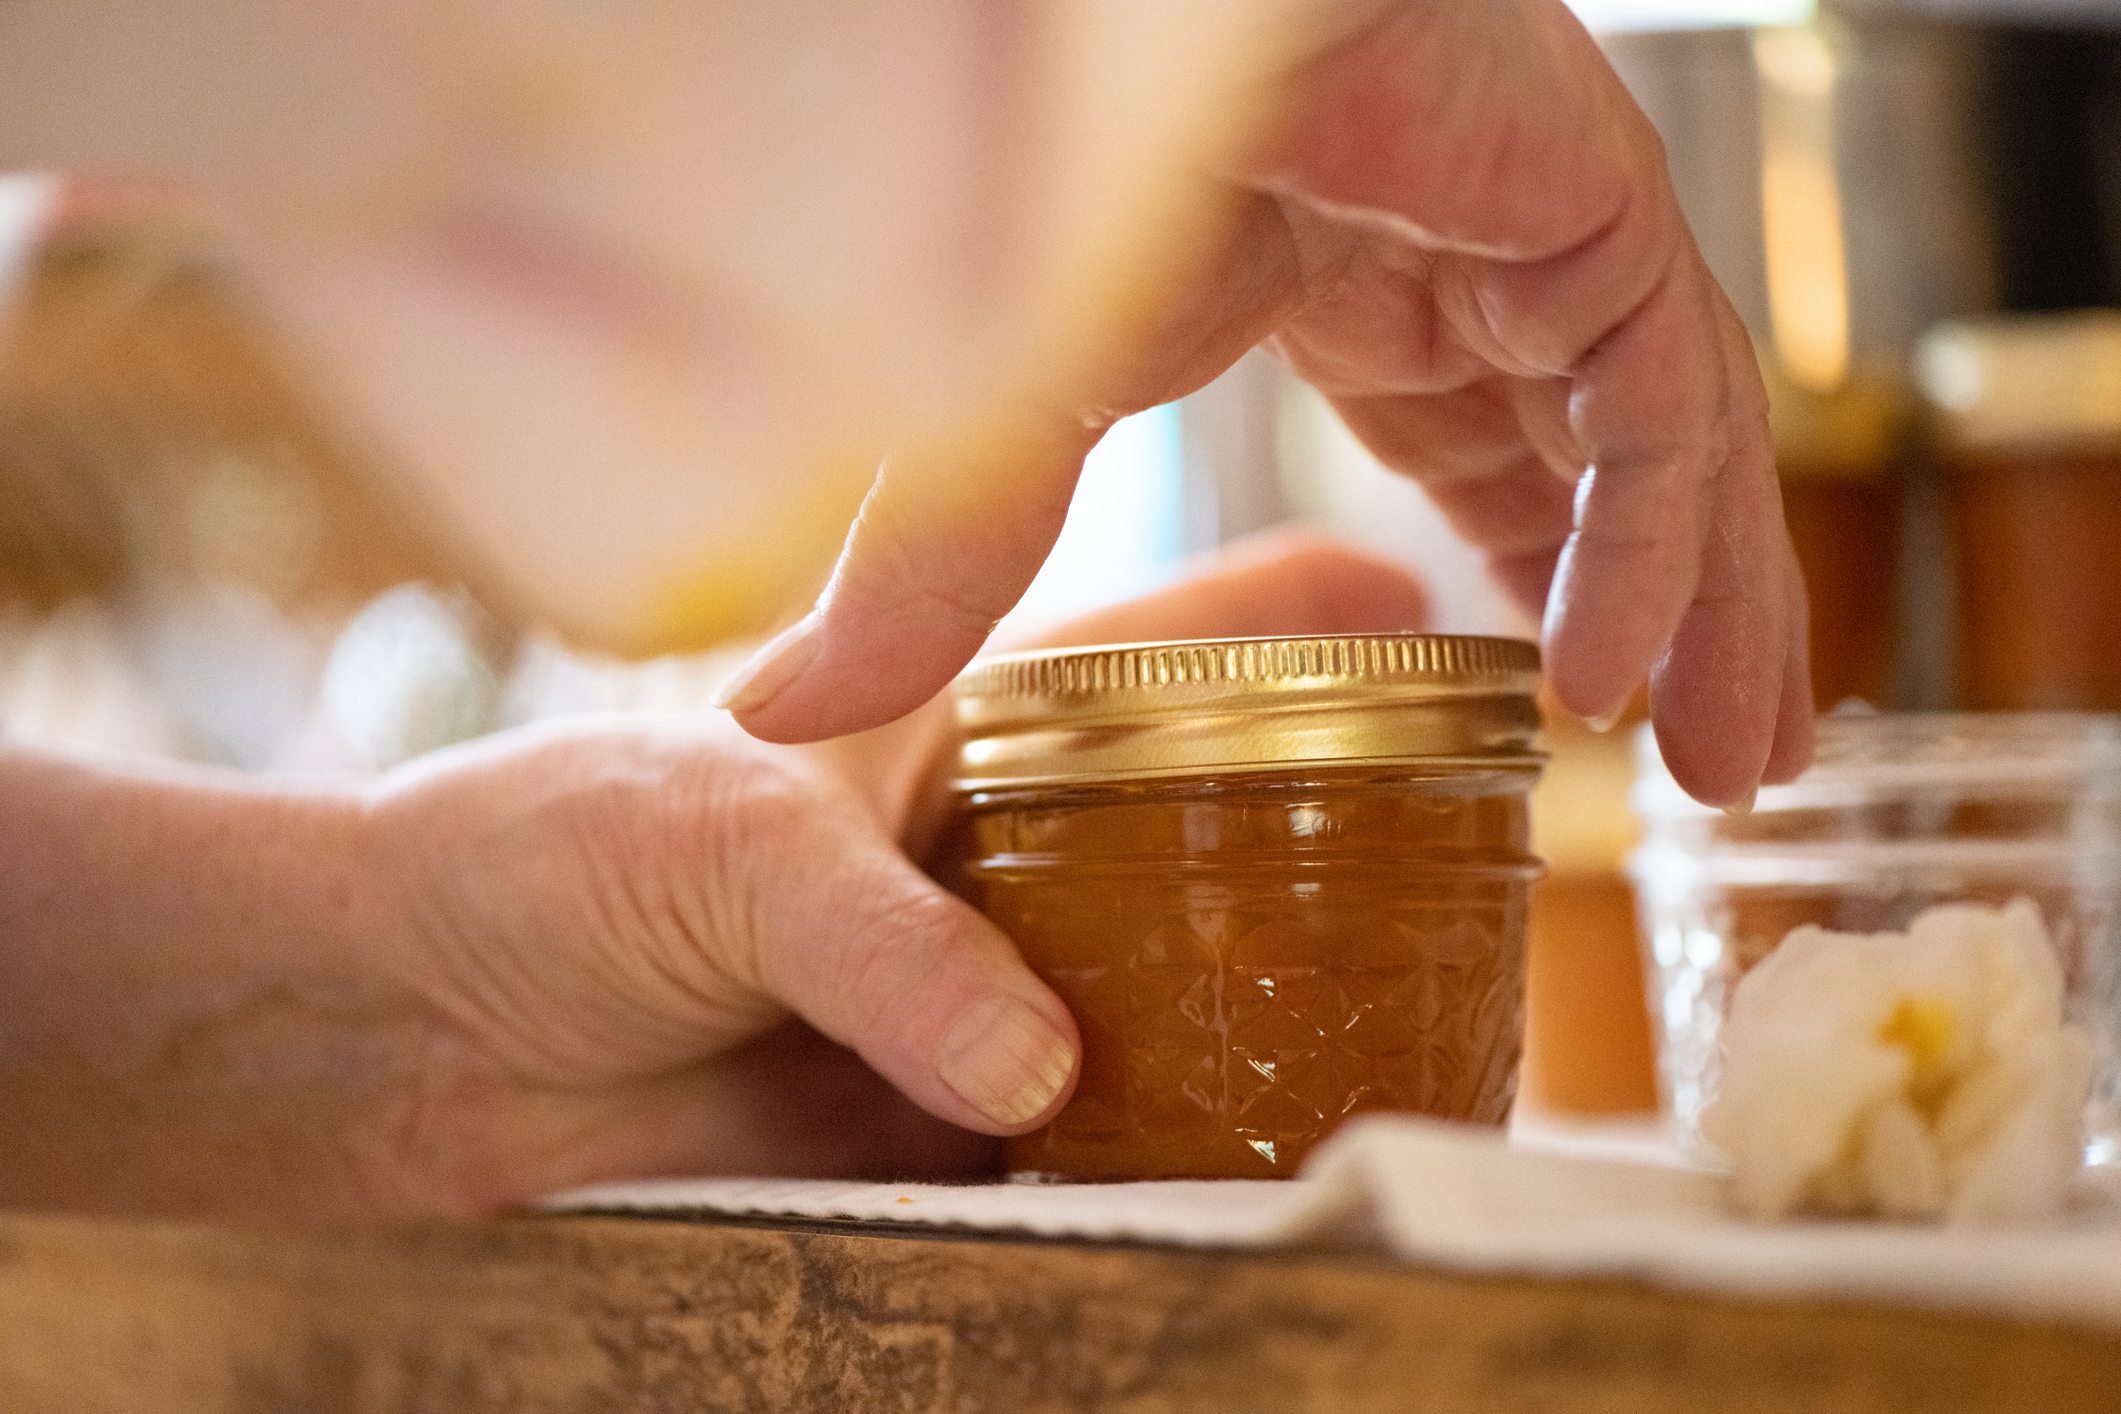 Hand gripping a jar